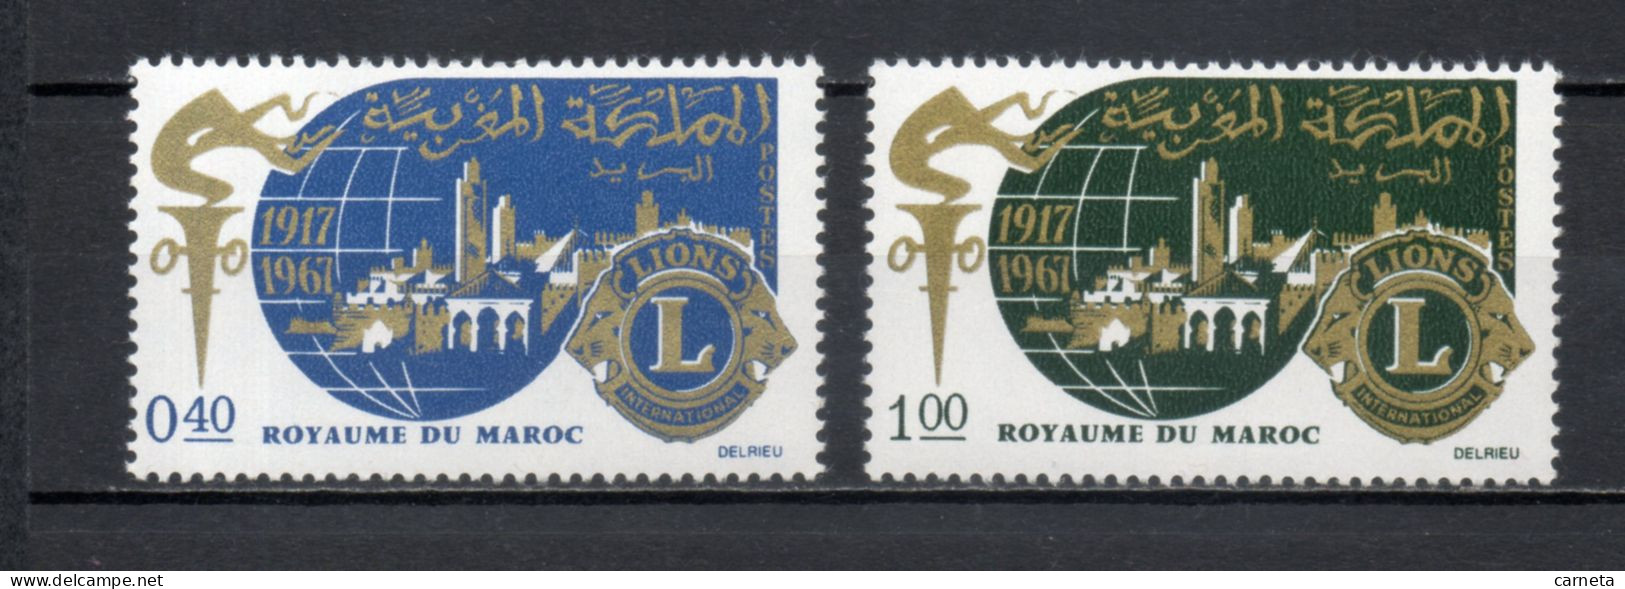 MAROC N°  521 + 522    NEUFS SANS CHARNIERE  COTE 2.00€     LIONS INTERNATIONAL - Marruecos (1956-...)